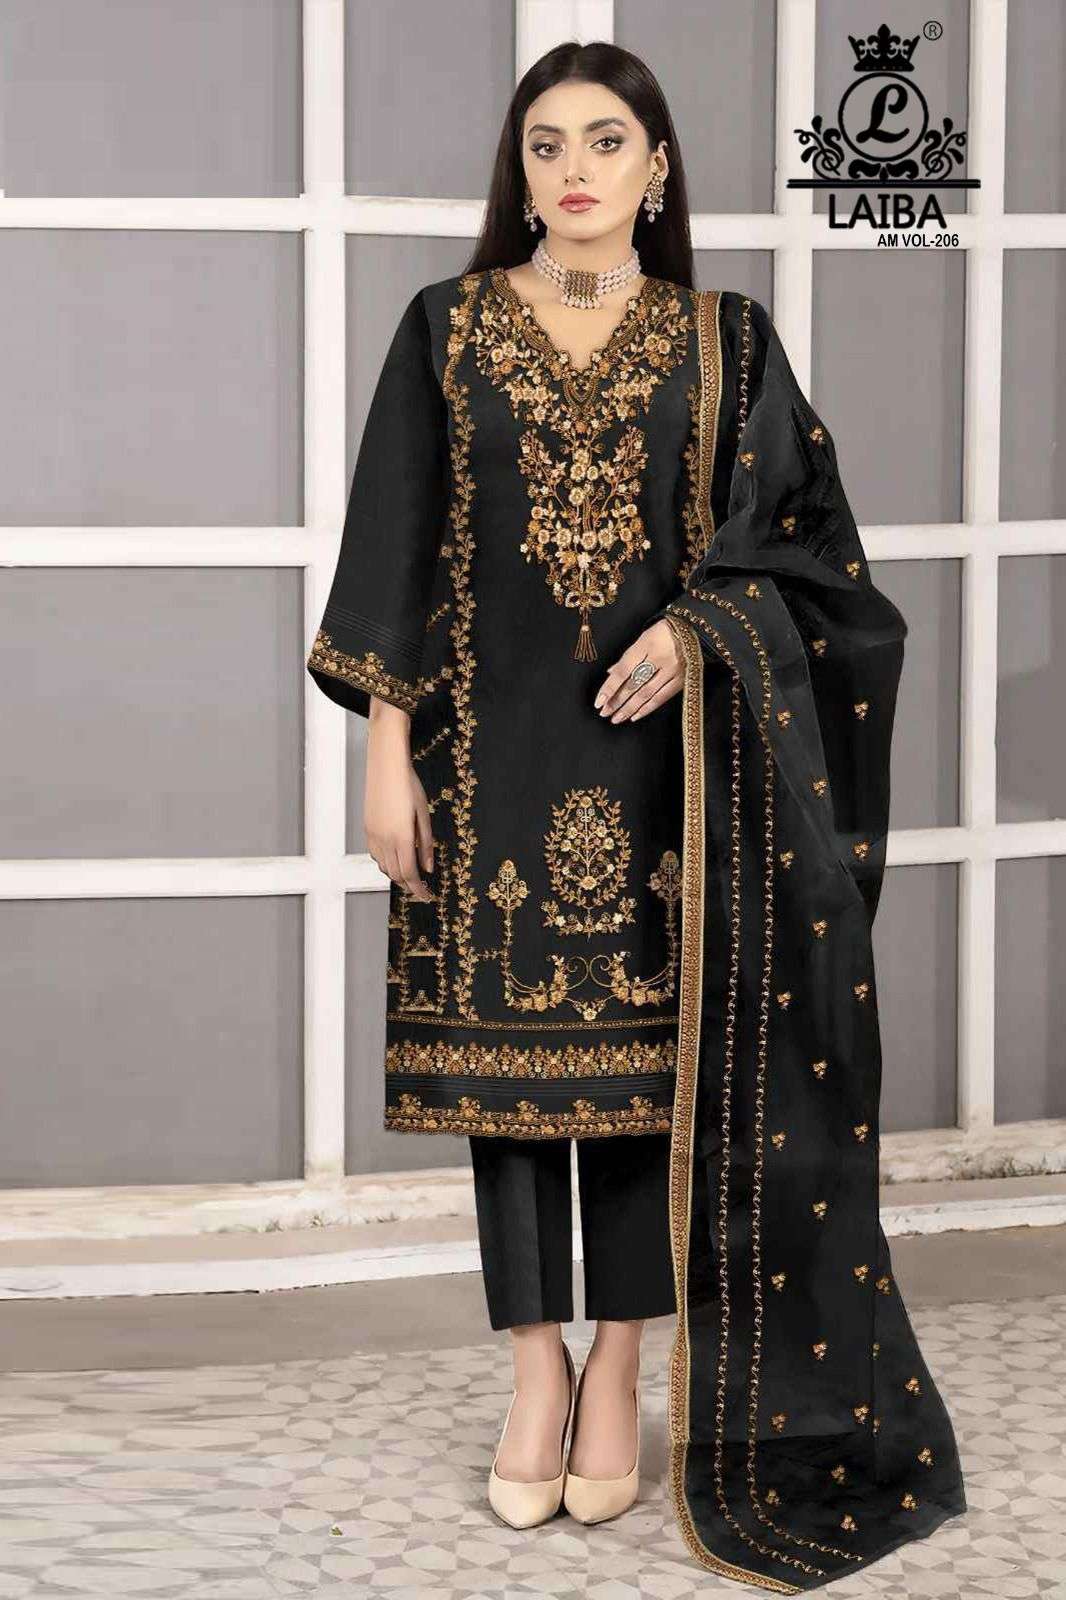 laiba am vol 206 beautifully designer pakistani kurti with pant and embroidery dupatta